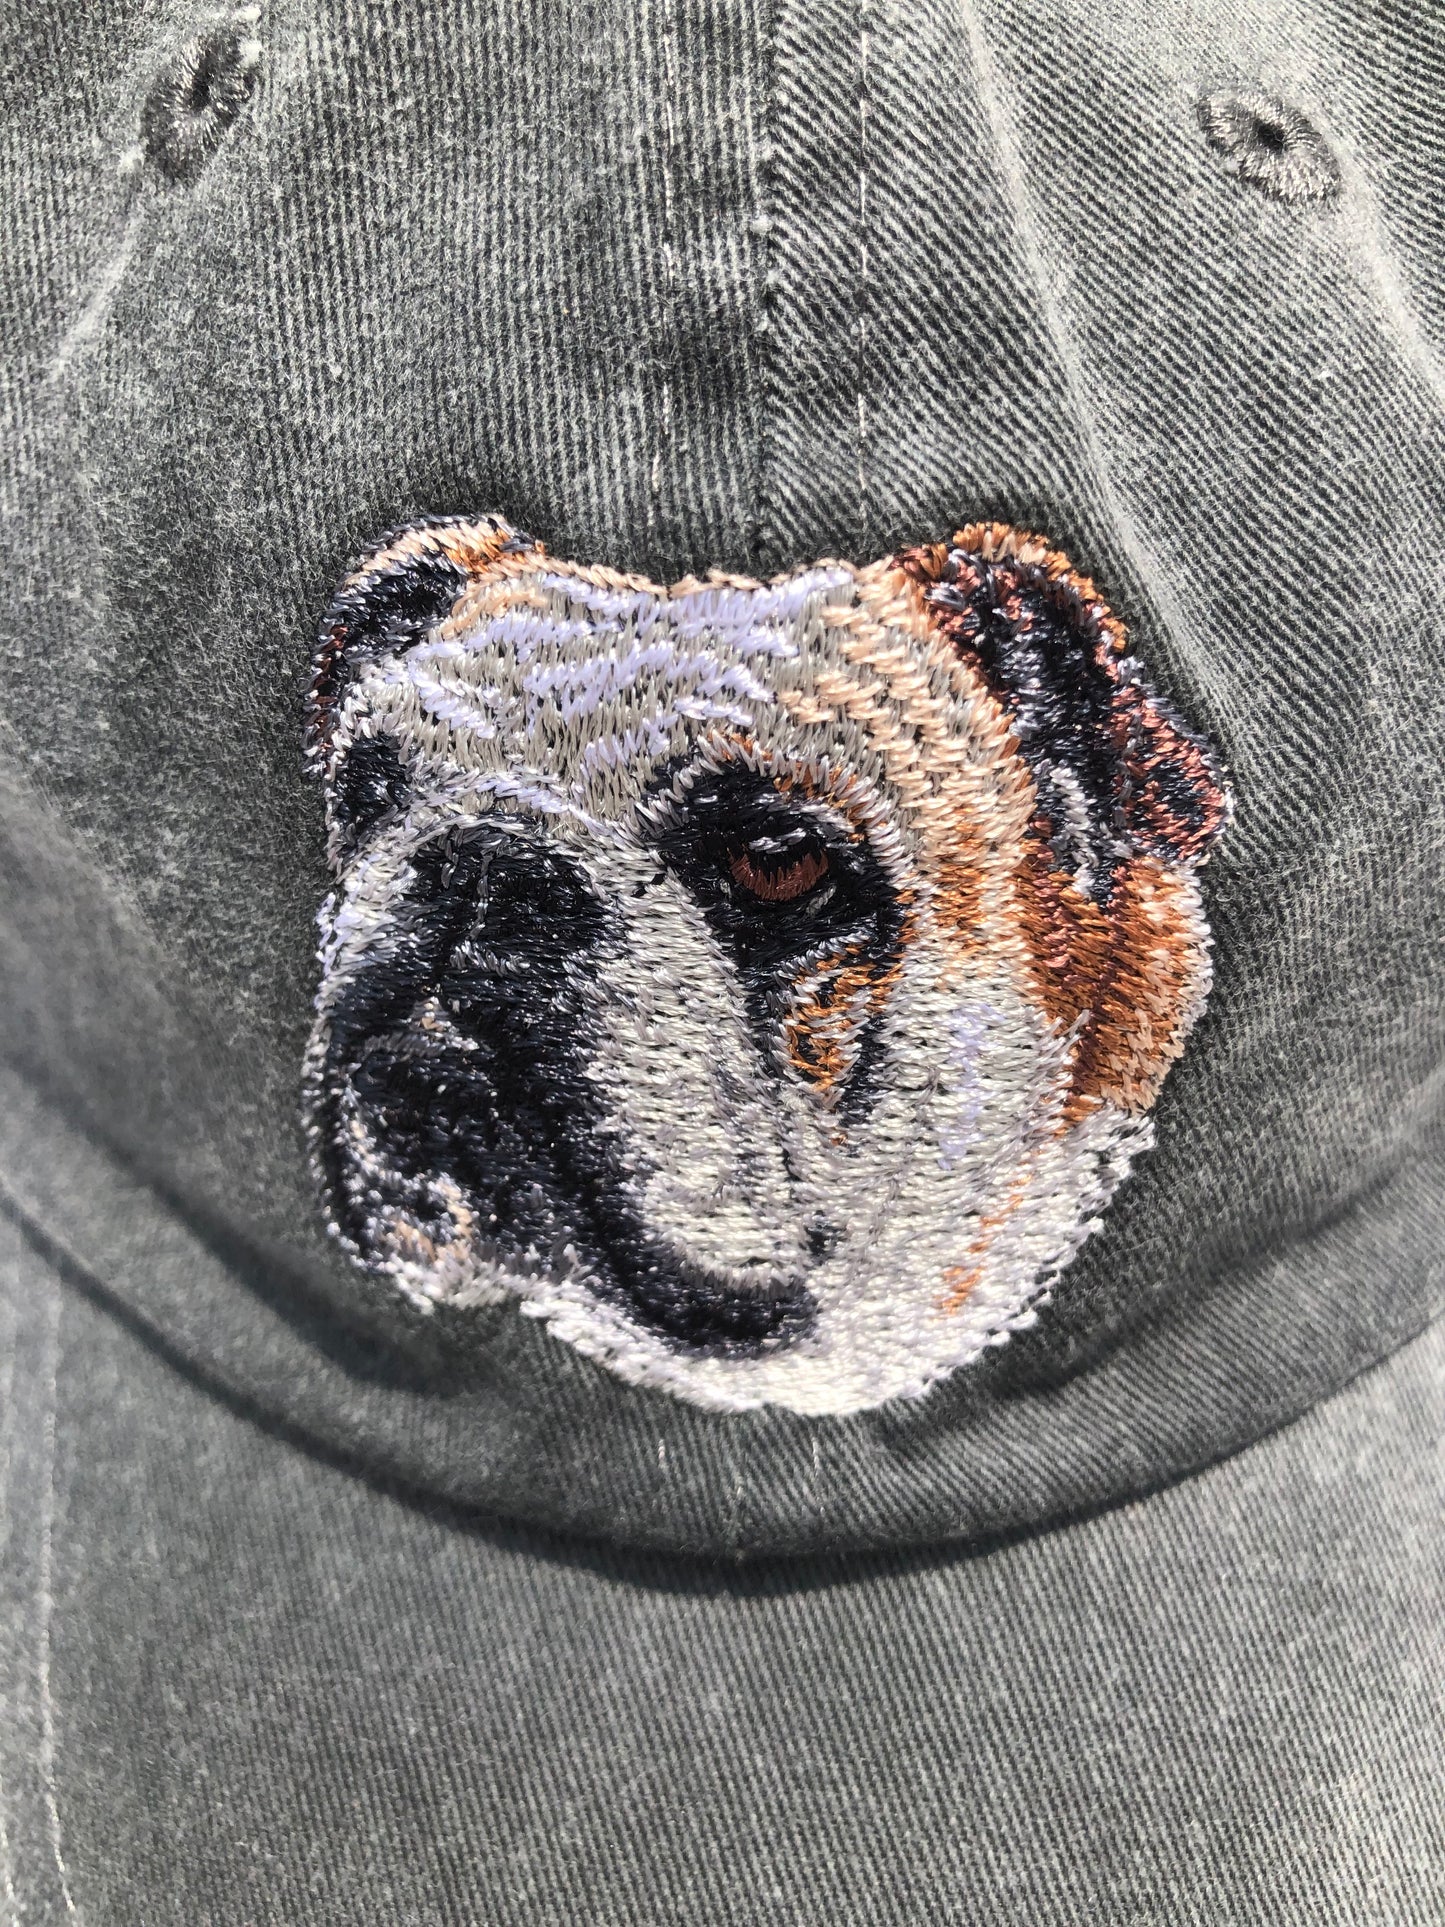 Dog embroidery cotton dad cap[fade black]-Bulldog(side)